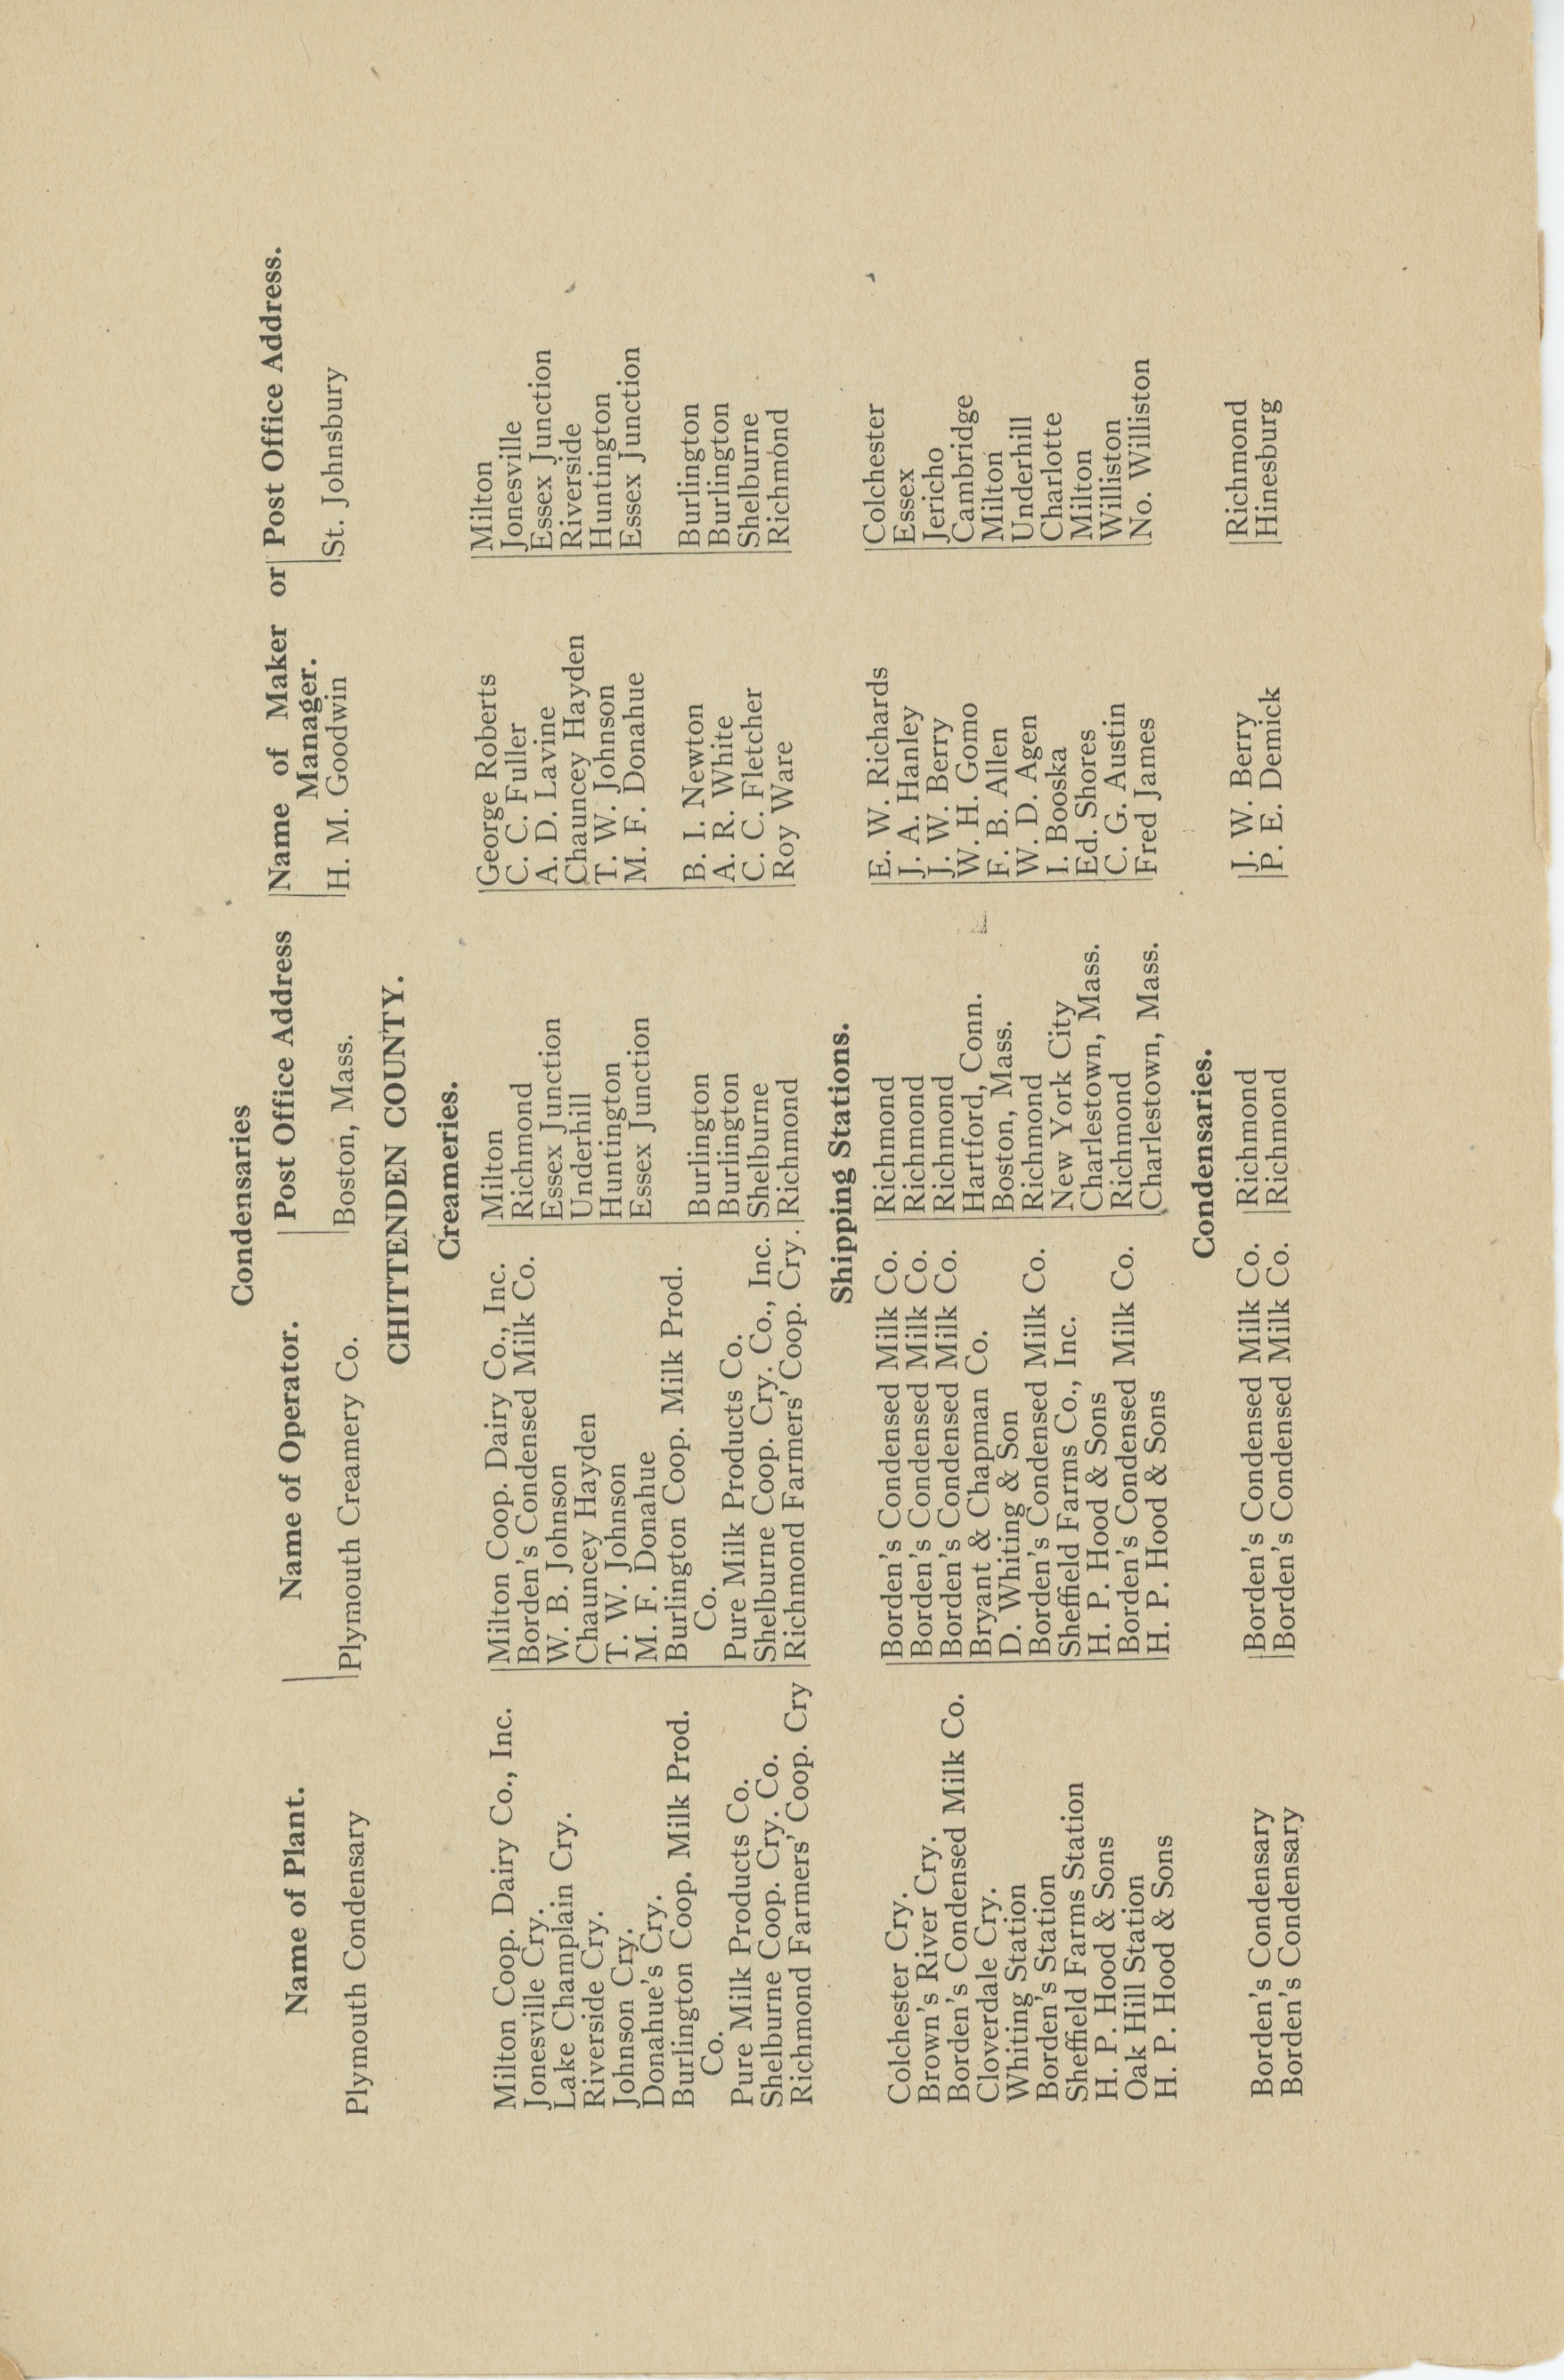 ced-1921-statedepartment-list of creameriespg3.jpeg